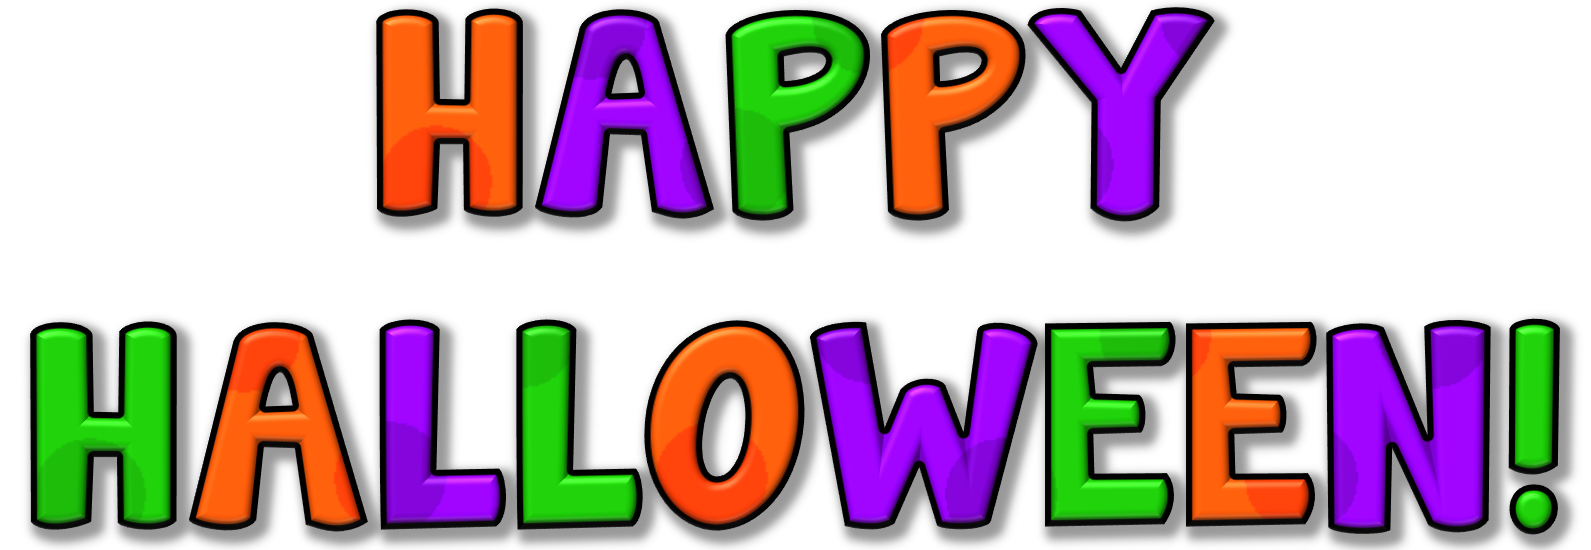 Happy Halloween Clip Art Free - Cliparts.co